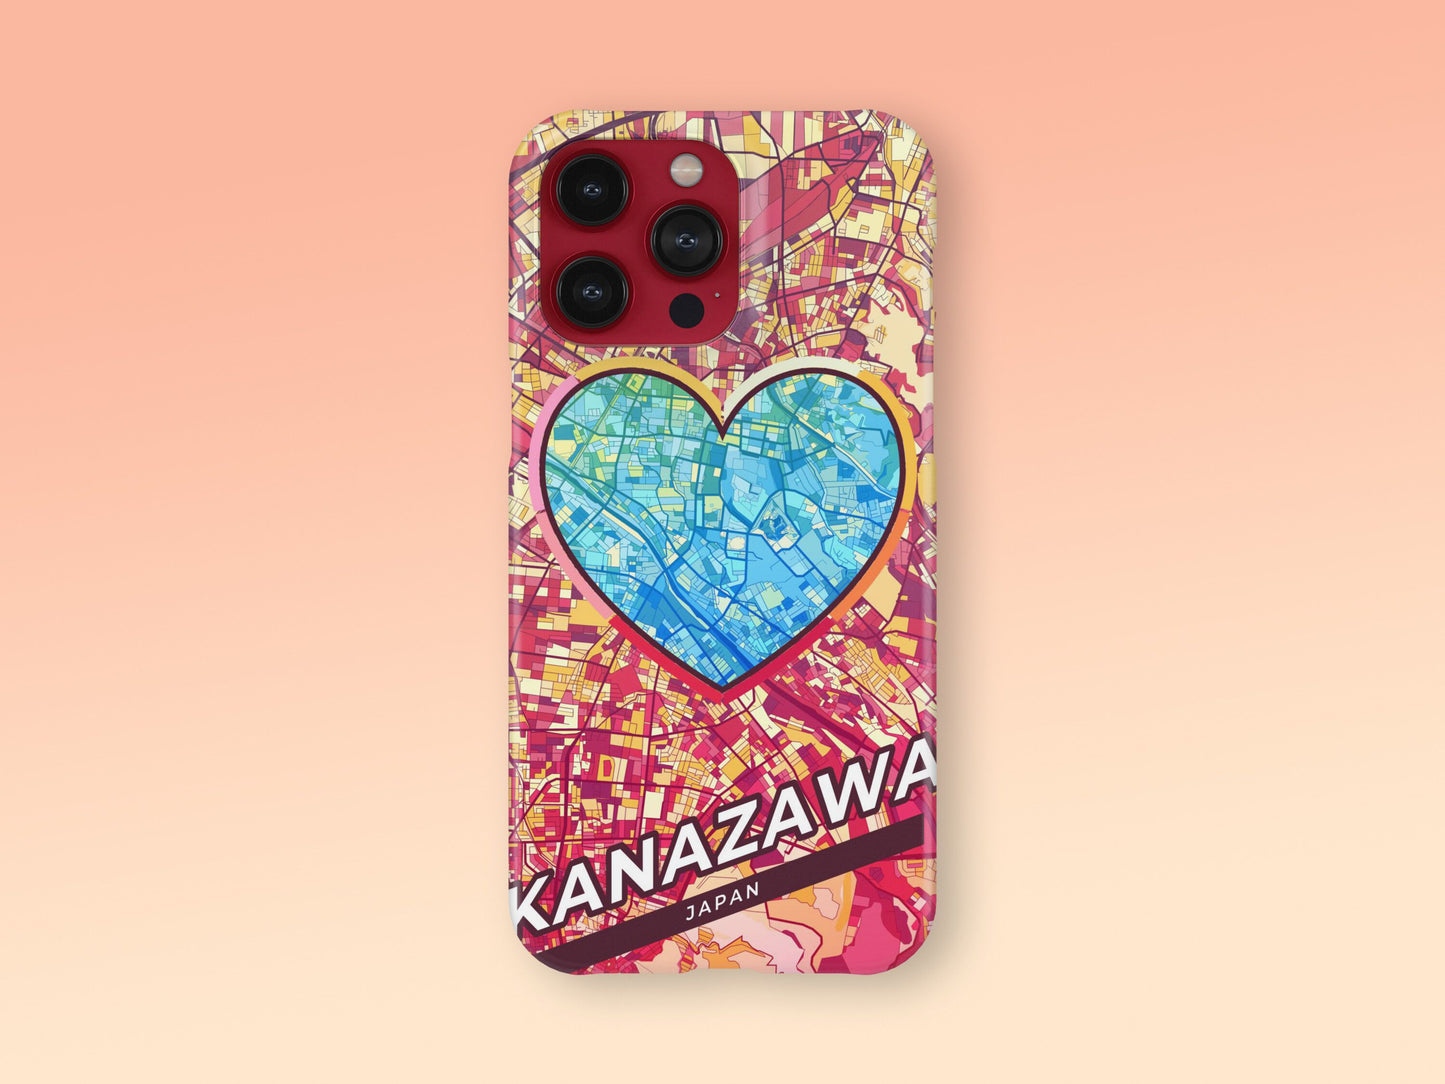 Kanazawa Japan slim phone case with colorful icon. Birthday, wedding or housewarming gift. Couple match cases. 2